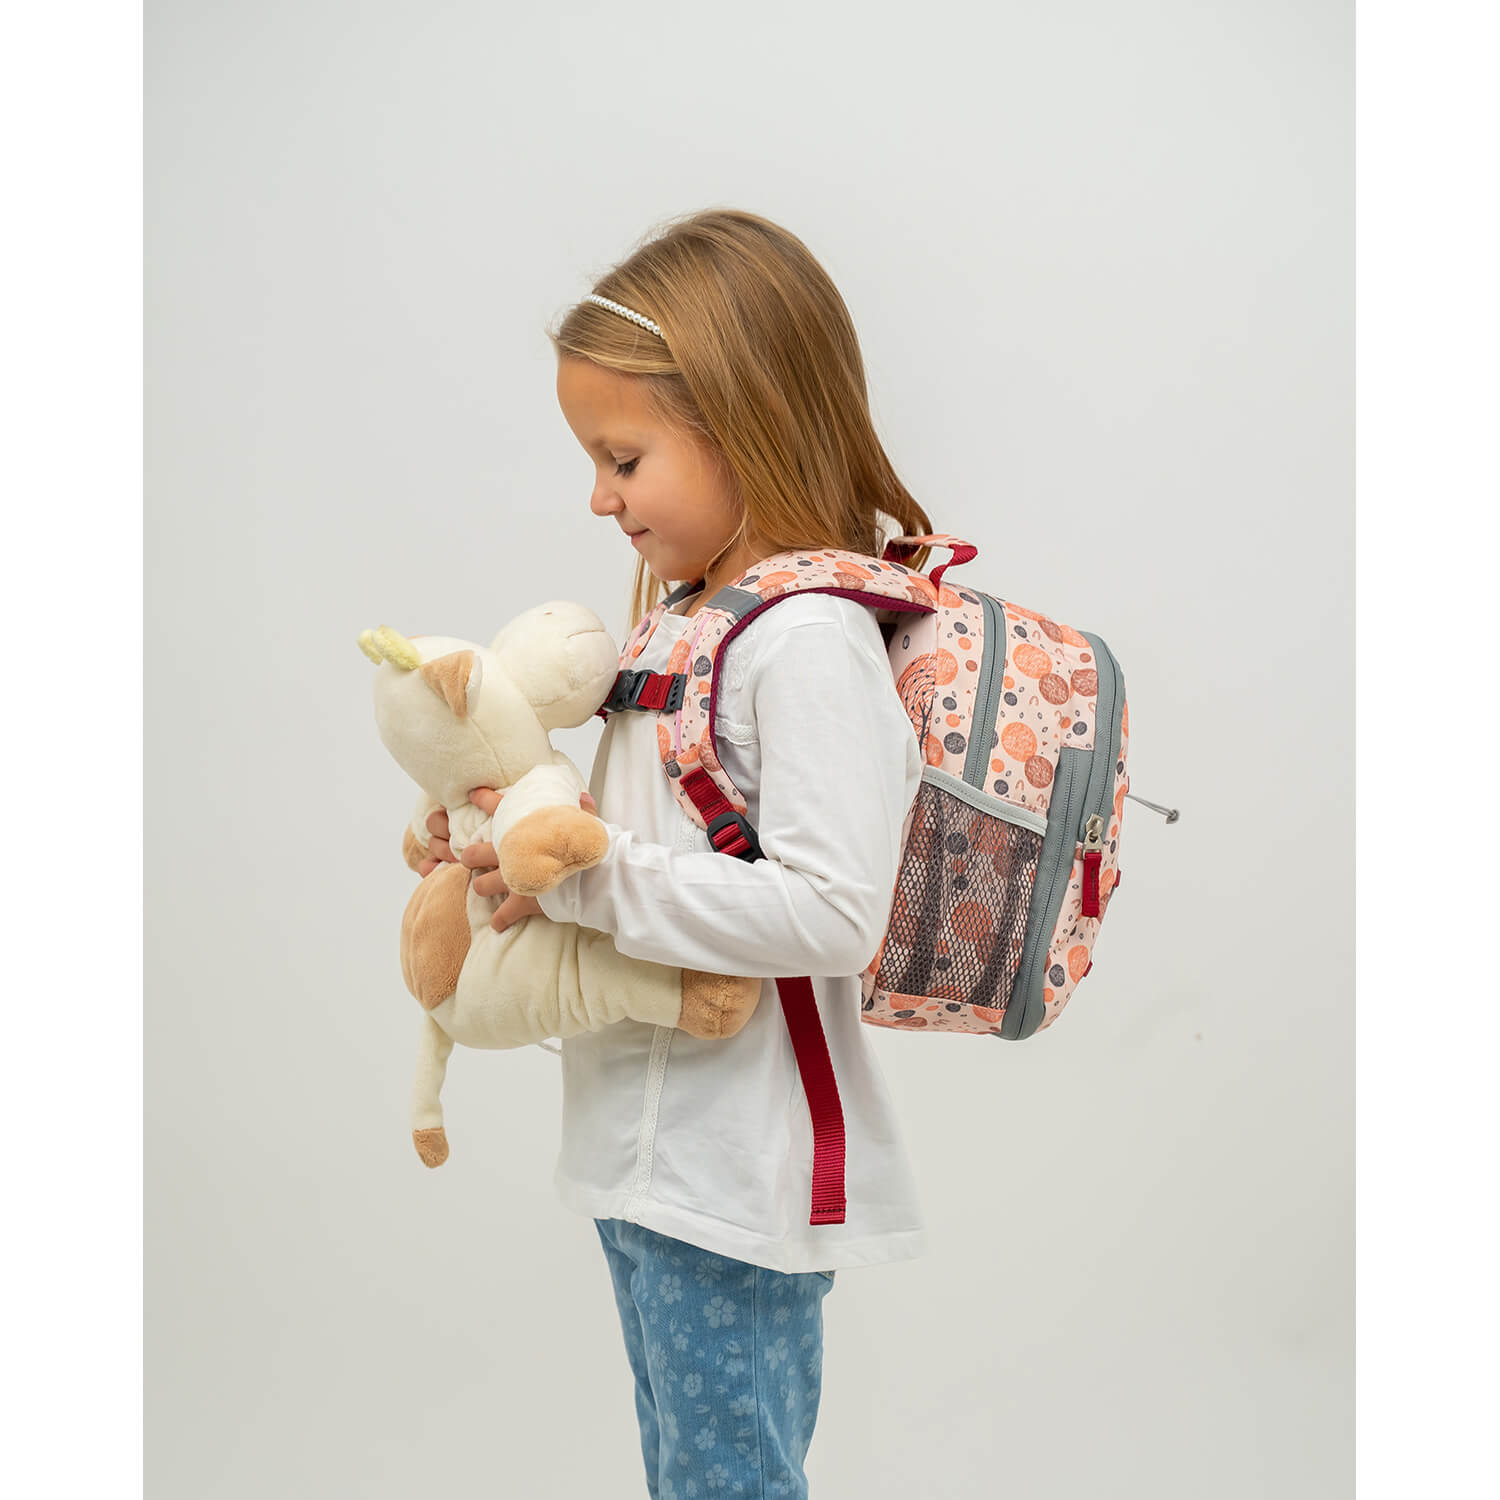 Mini Kiddy Woodland Foxy Kindergarten Bag